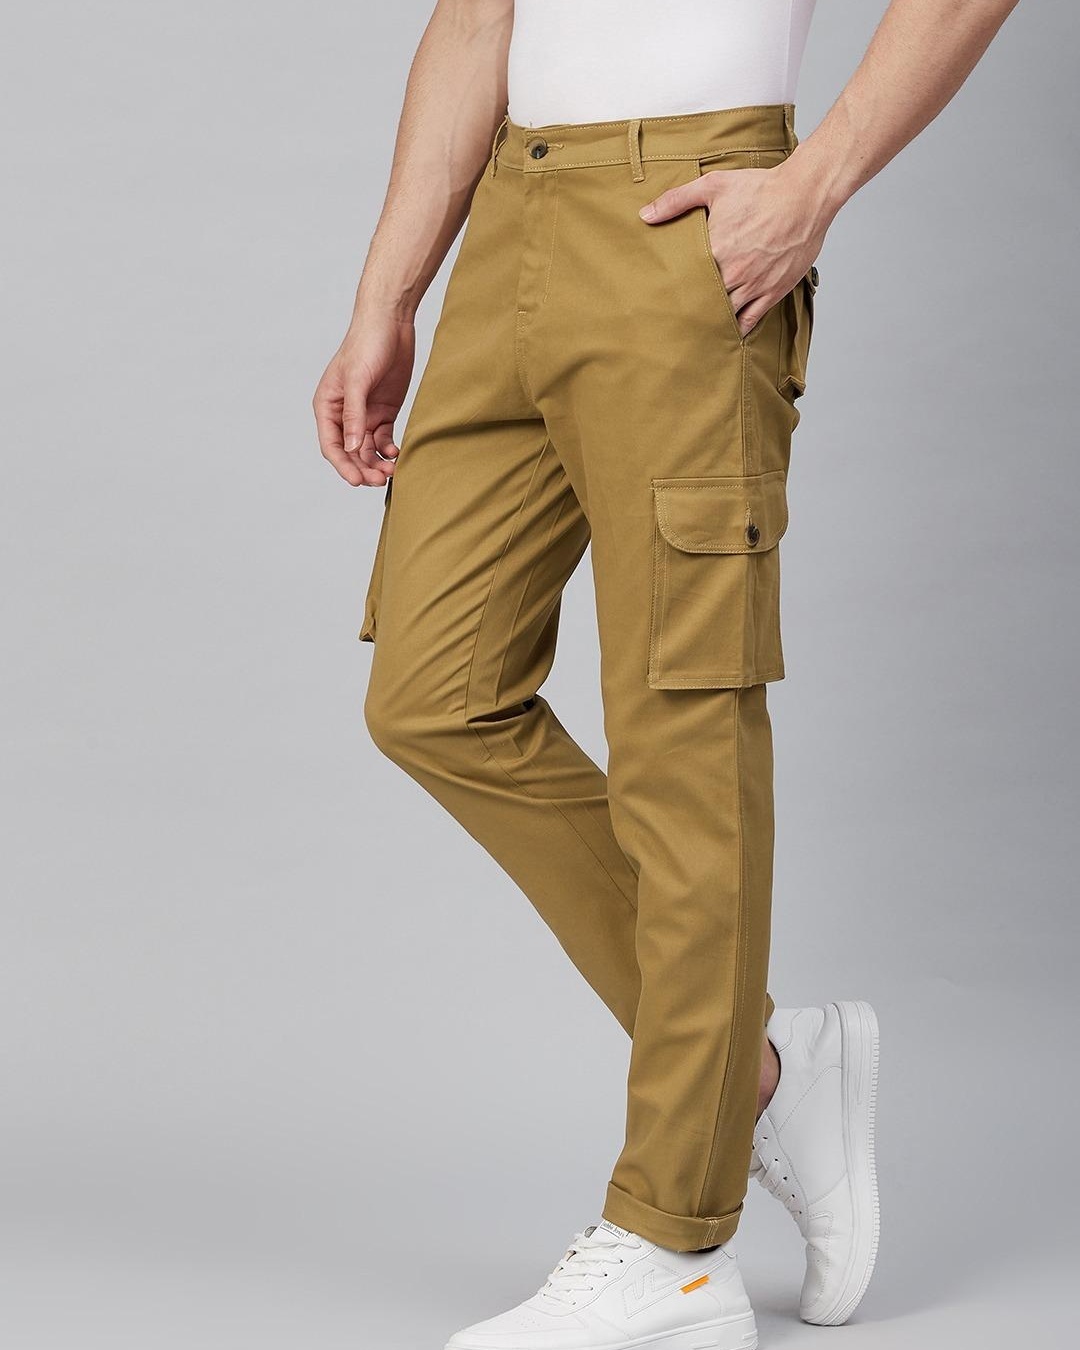 Hubberholme Men's Cotton Blend Slim Fit Cargo Track Pants (Solid, Grey,  30),Size 30